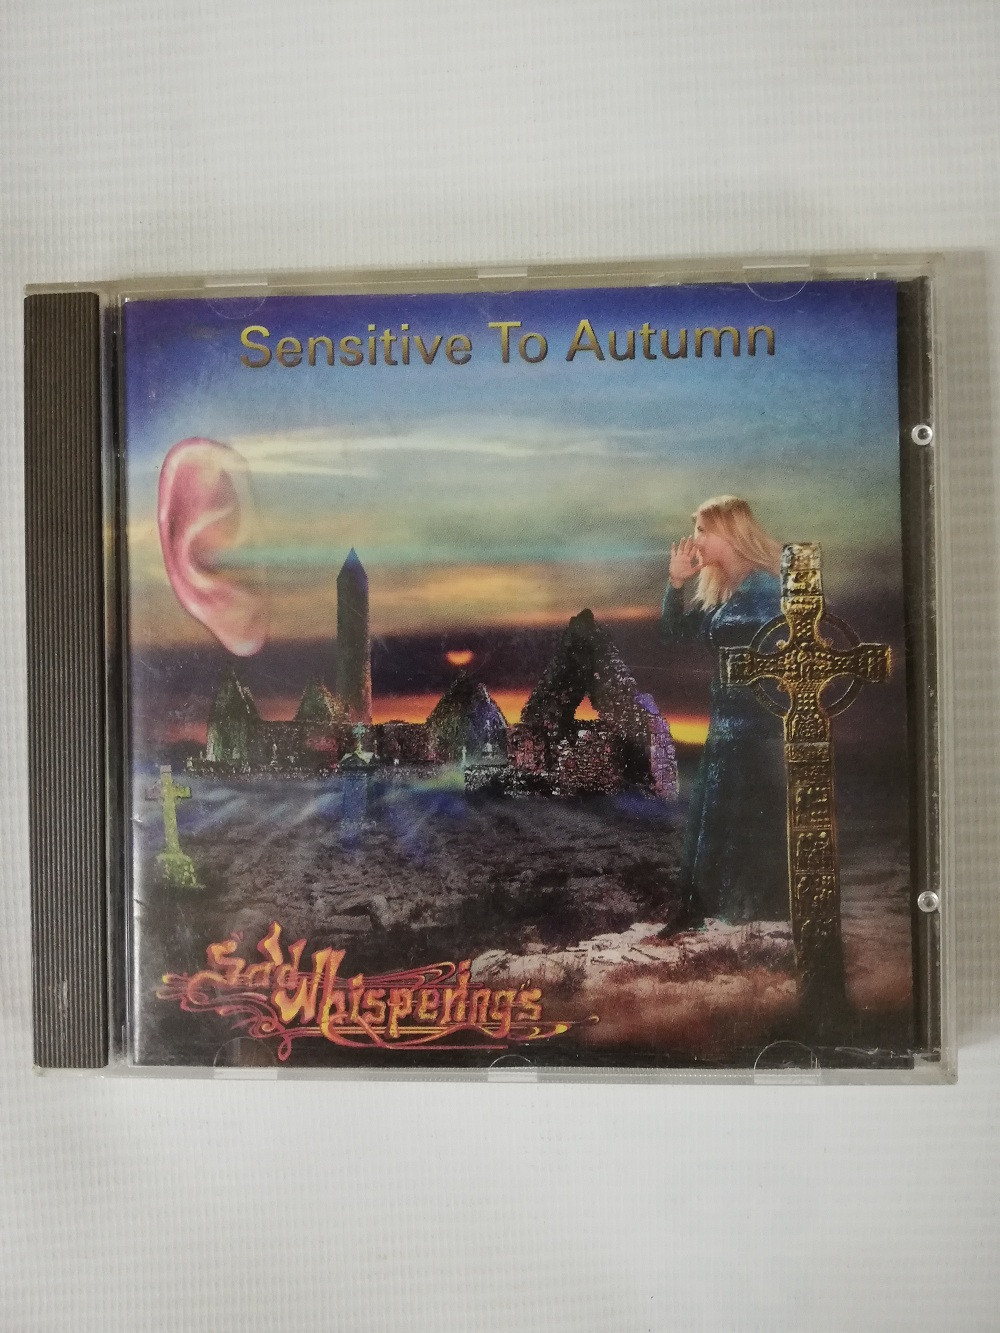 Imagen CD SAD WHISPERINGS - SENSITIVE TO AUTUMN 1